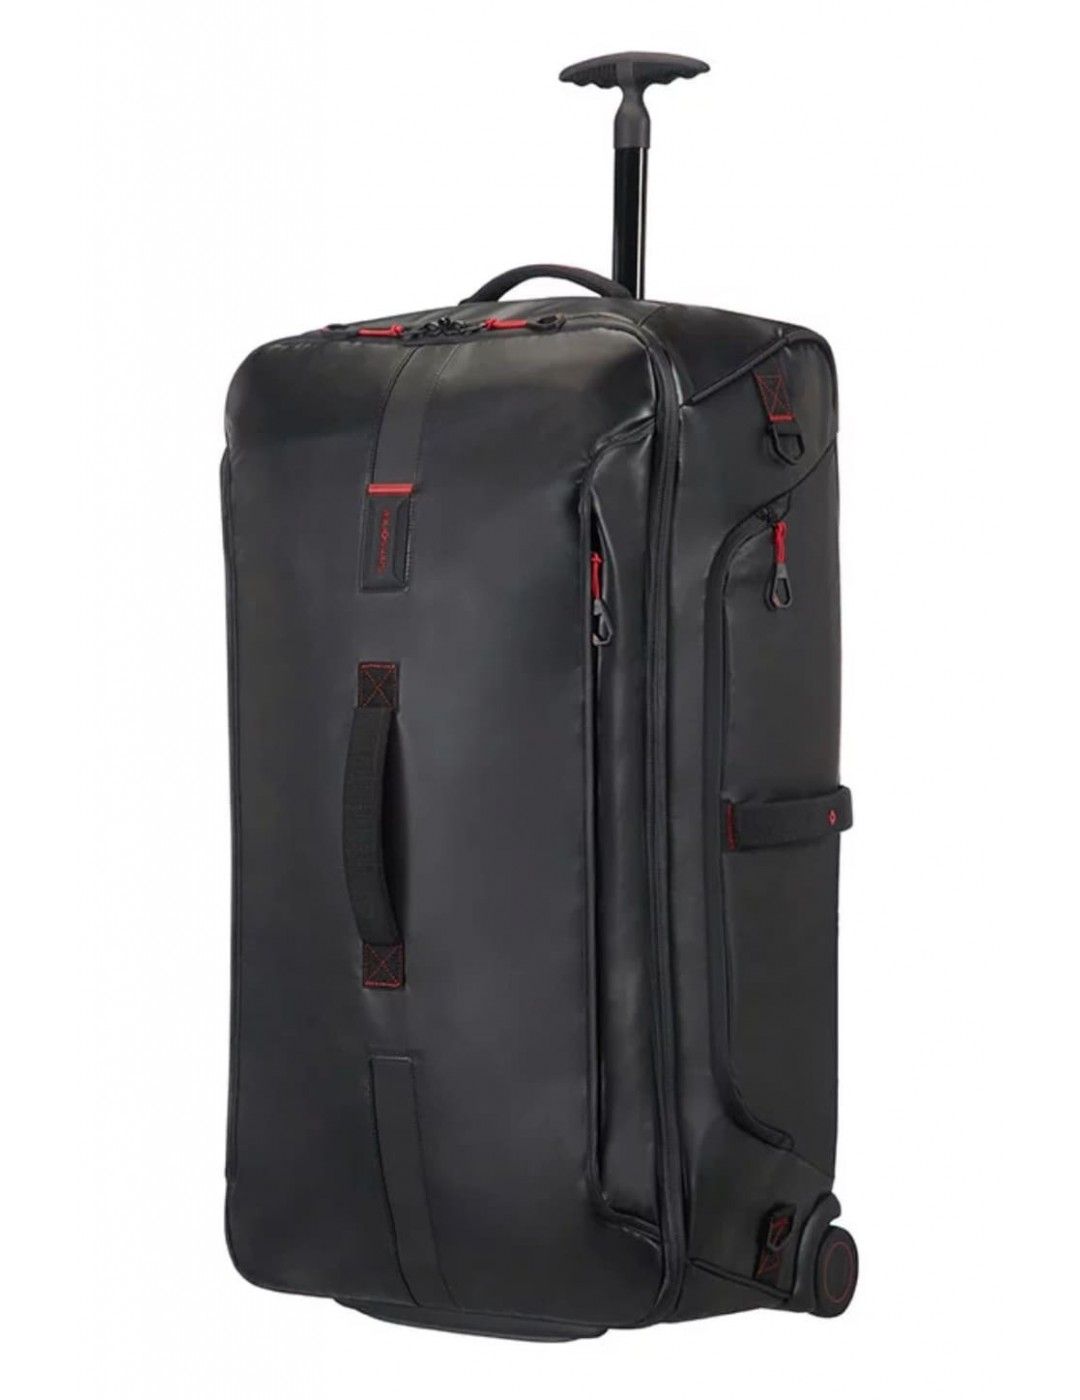 Samsonite Paradiver Light travel bag 79 with wheels